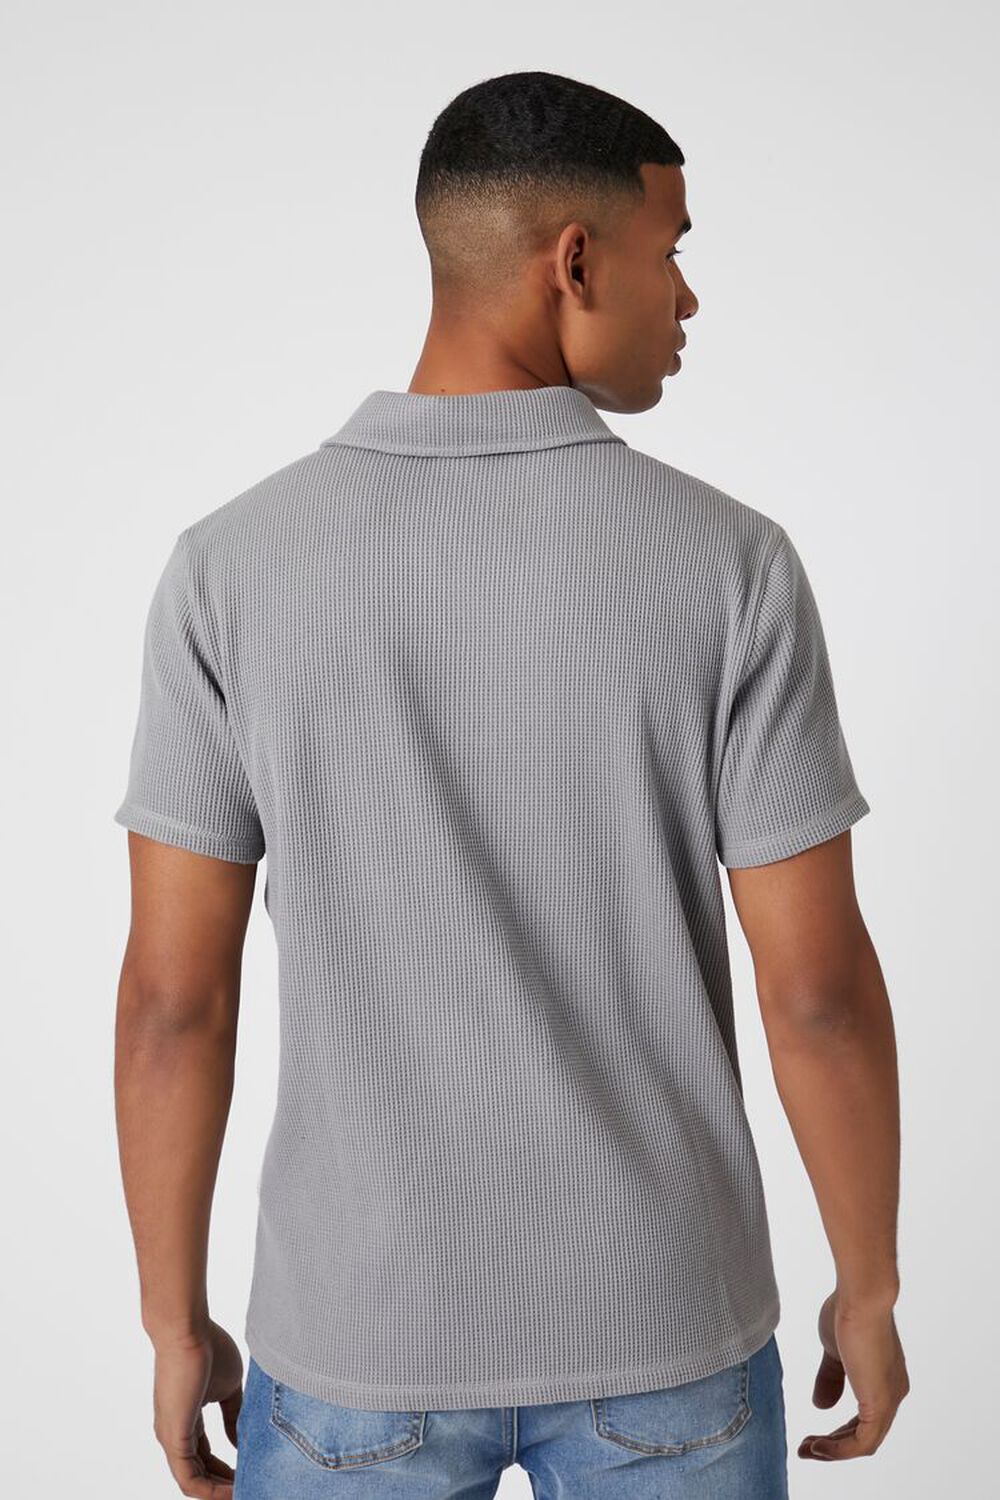 HARBOR GREY Ribbed Slim-Fit Pocket Polo Shirt, image 3